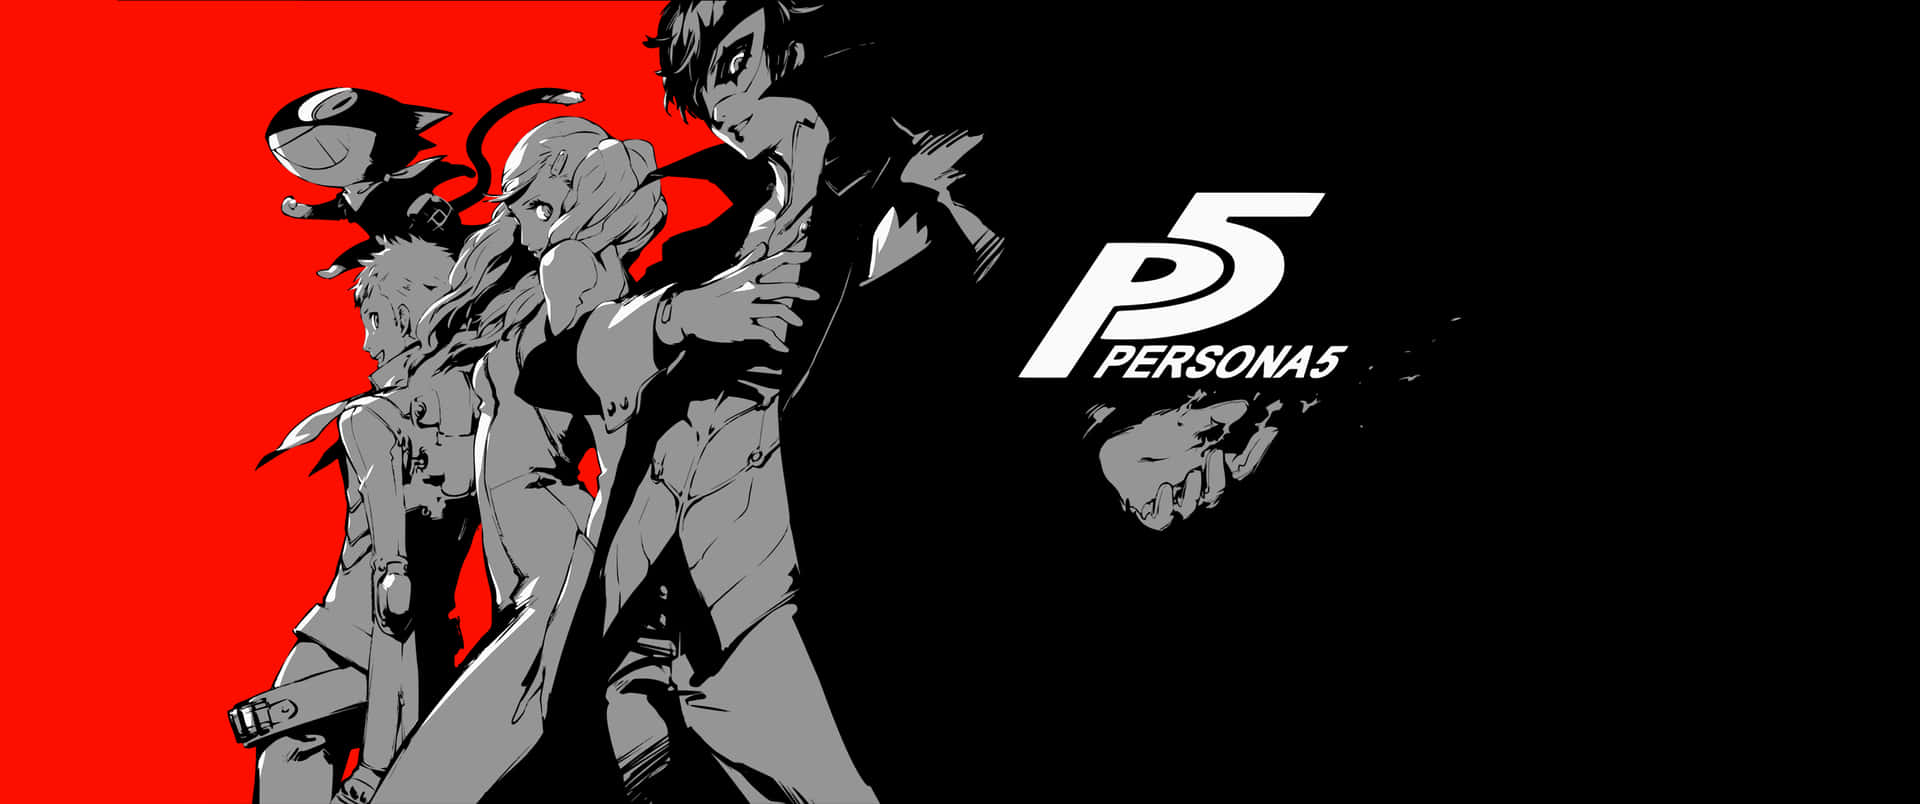 Persona5 Red Black Character Art Wallpaper